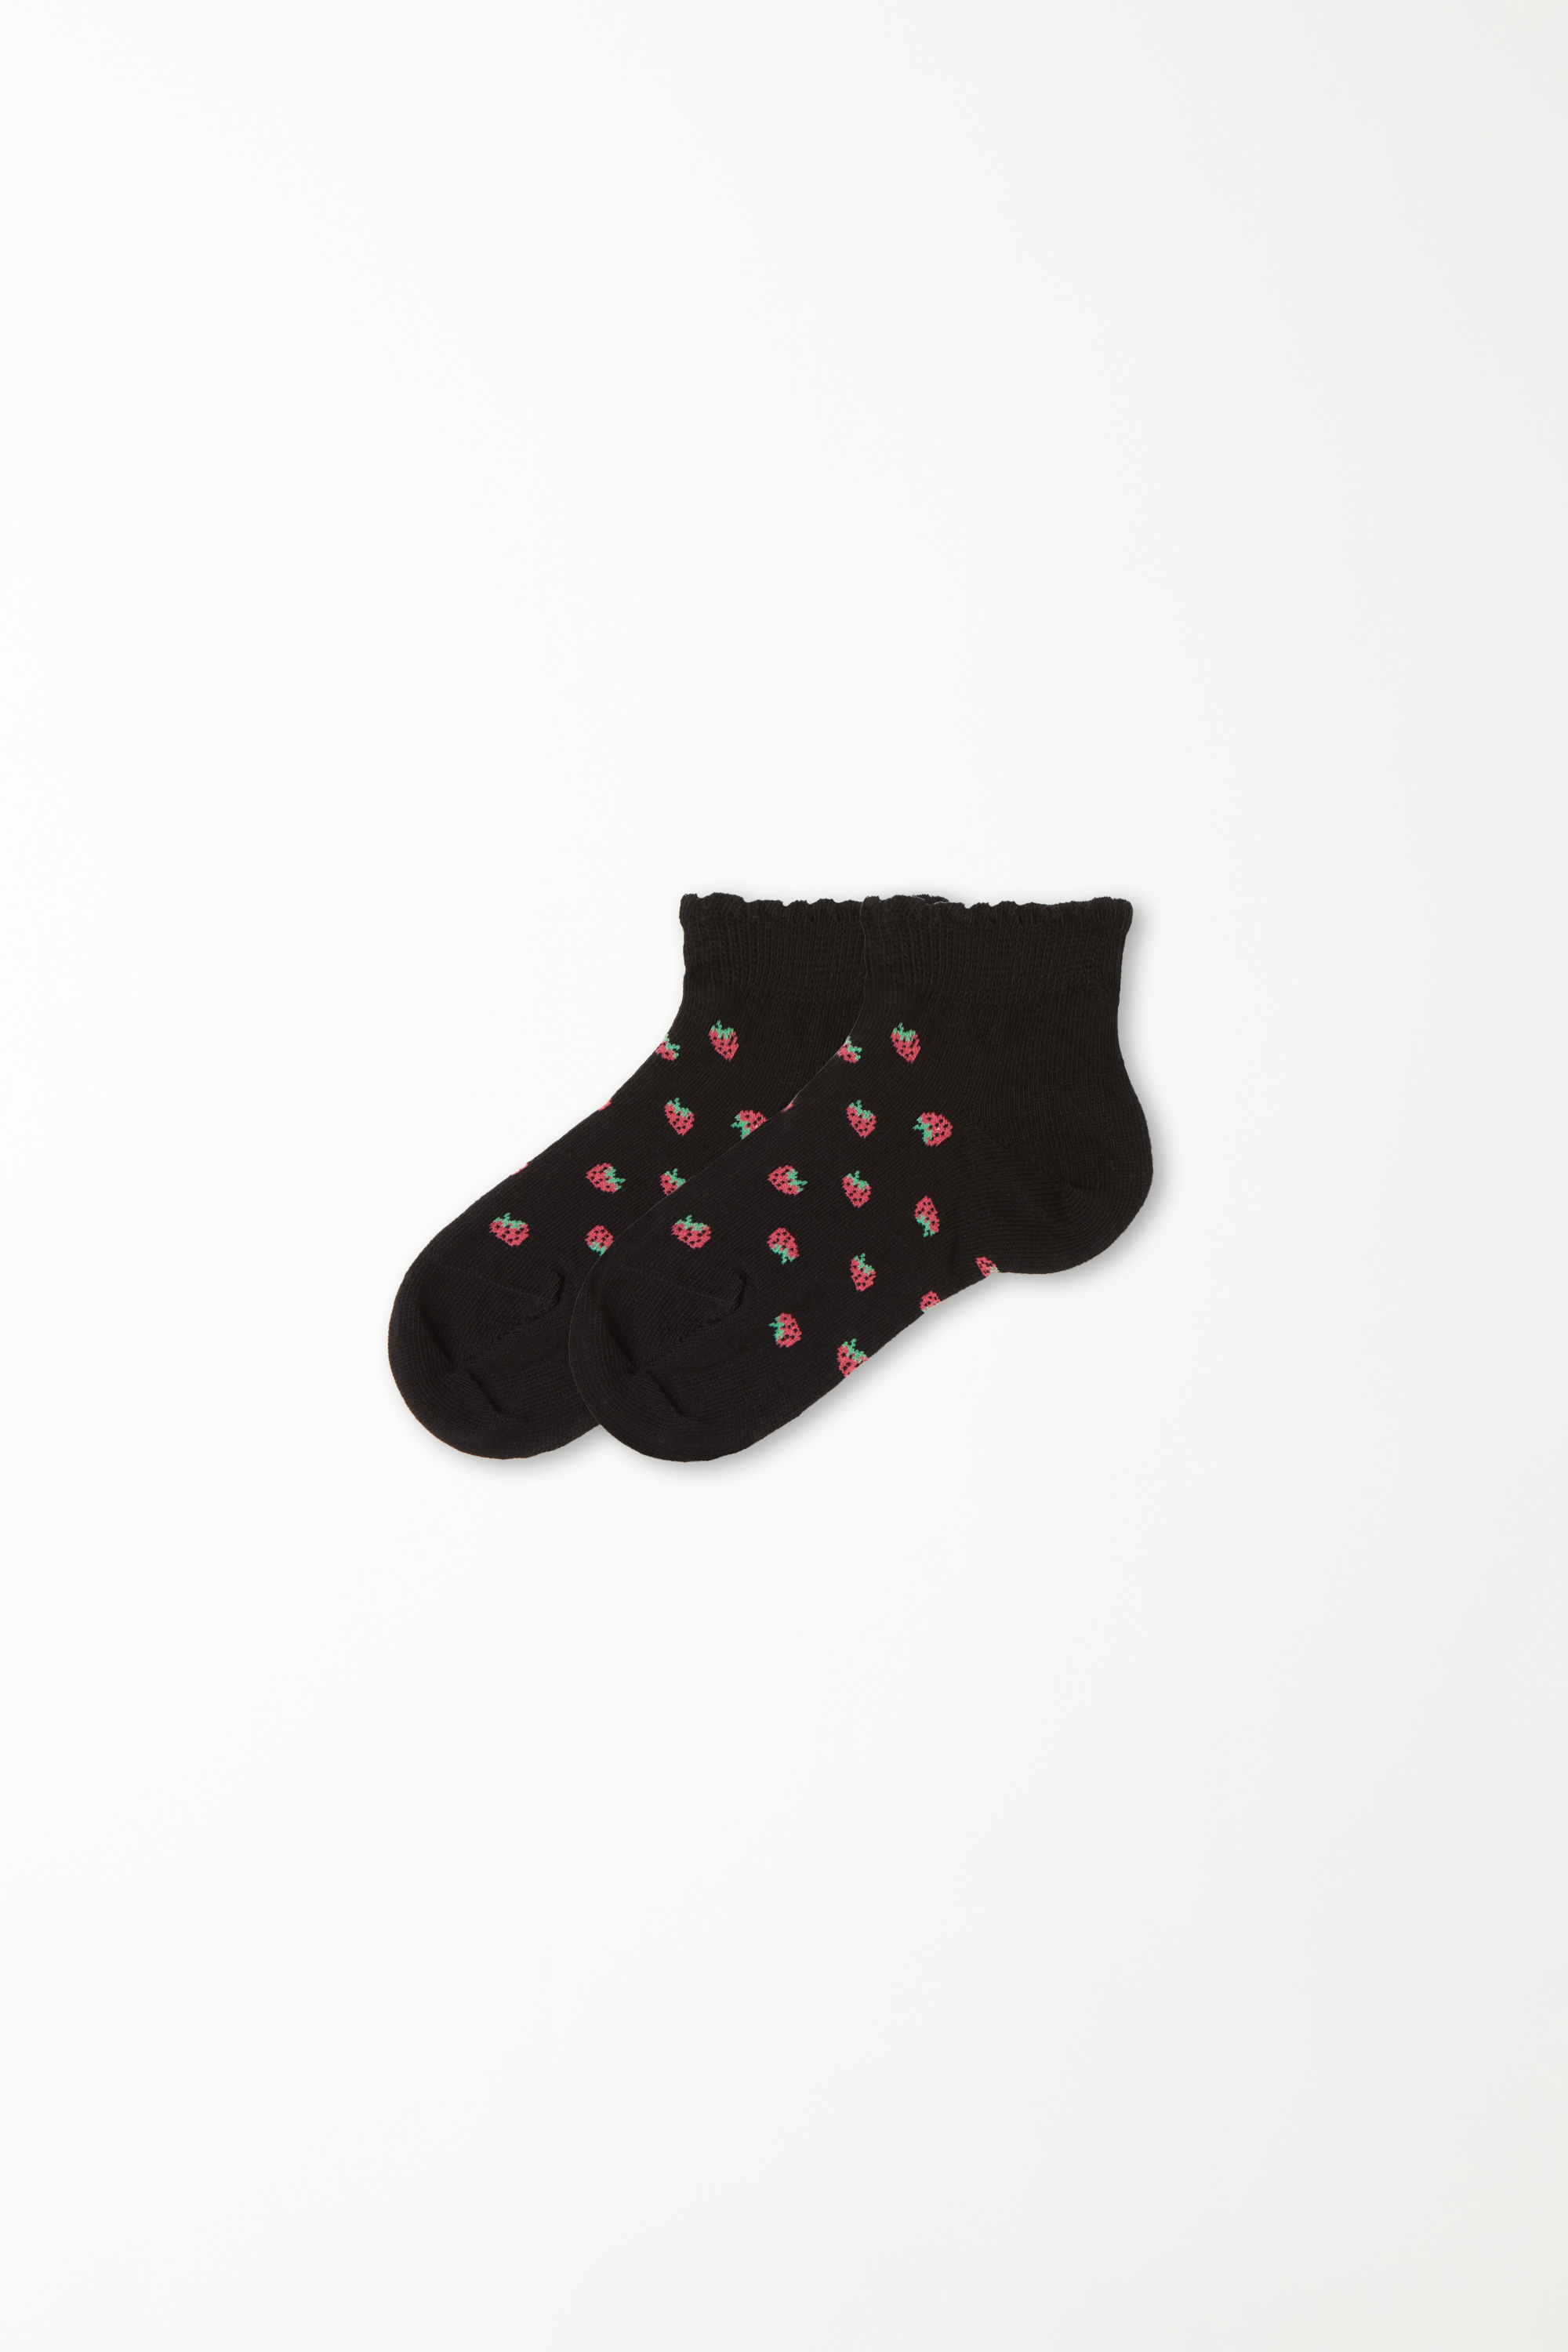 Girls’ Patterned Cotton Trainer Socks